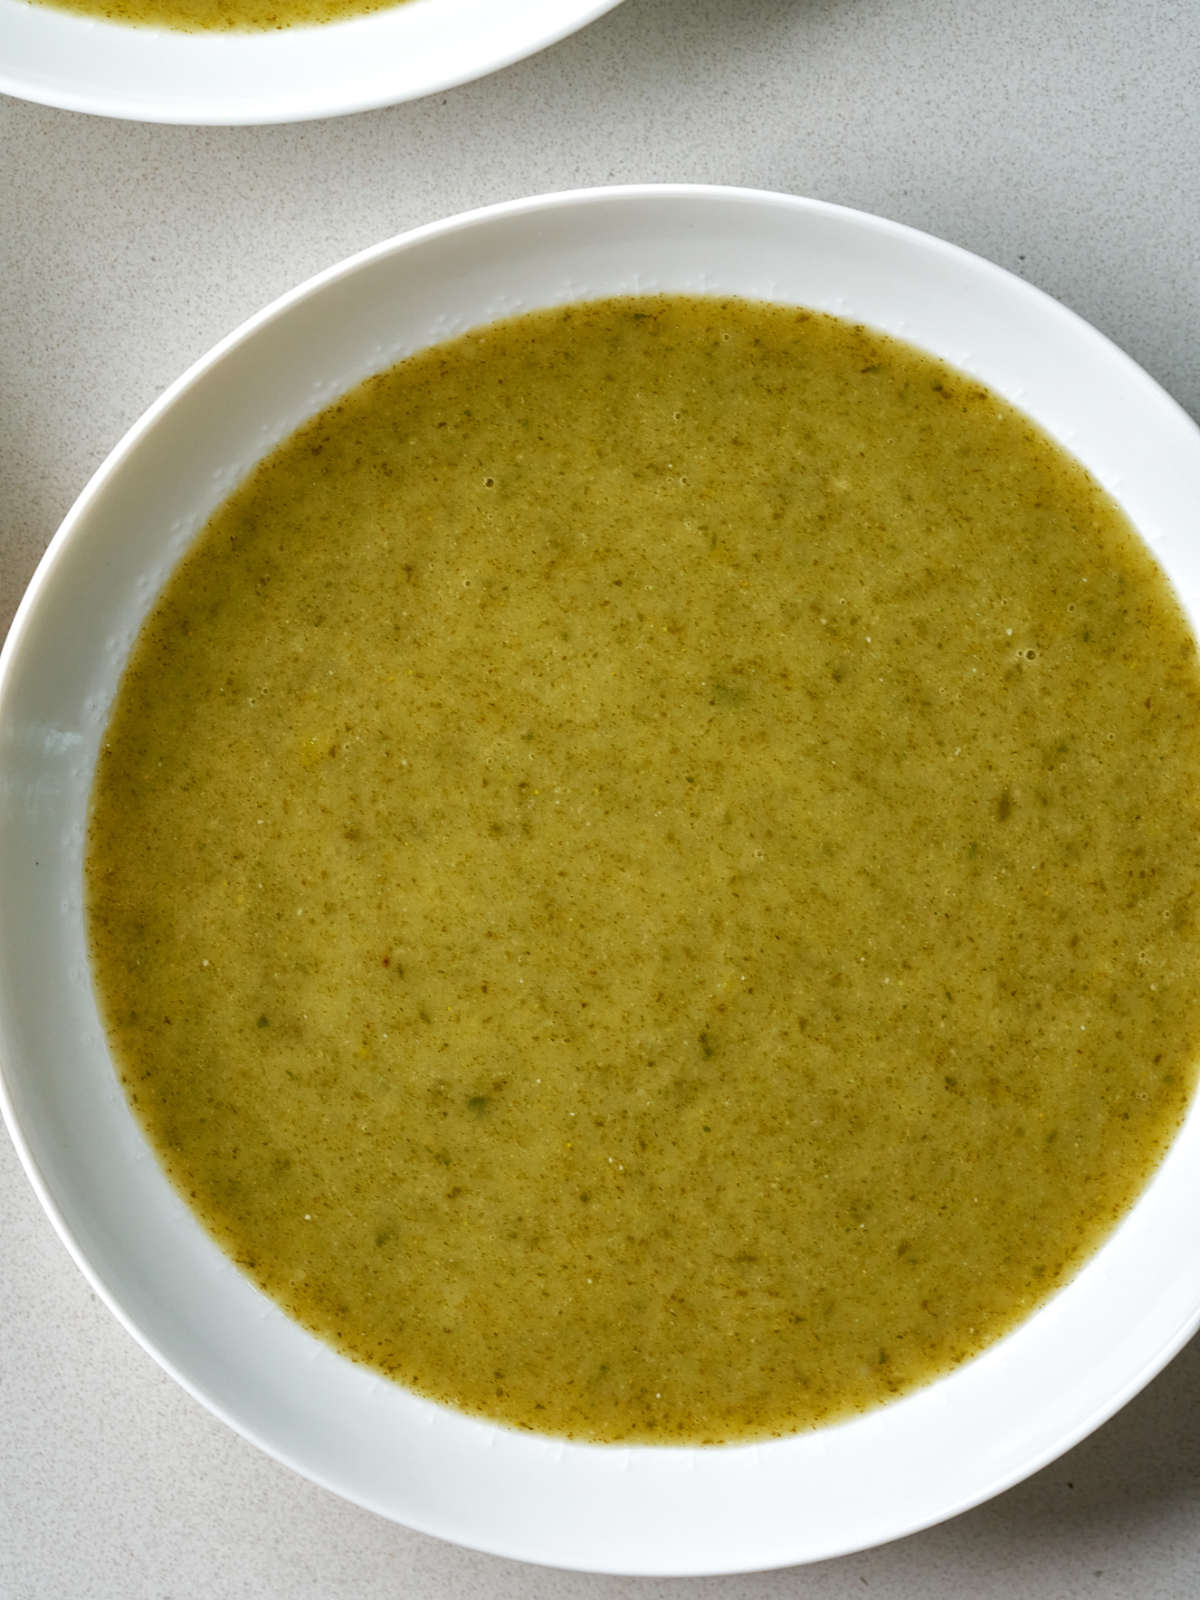 Green puree soup in a white soup bowl.